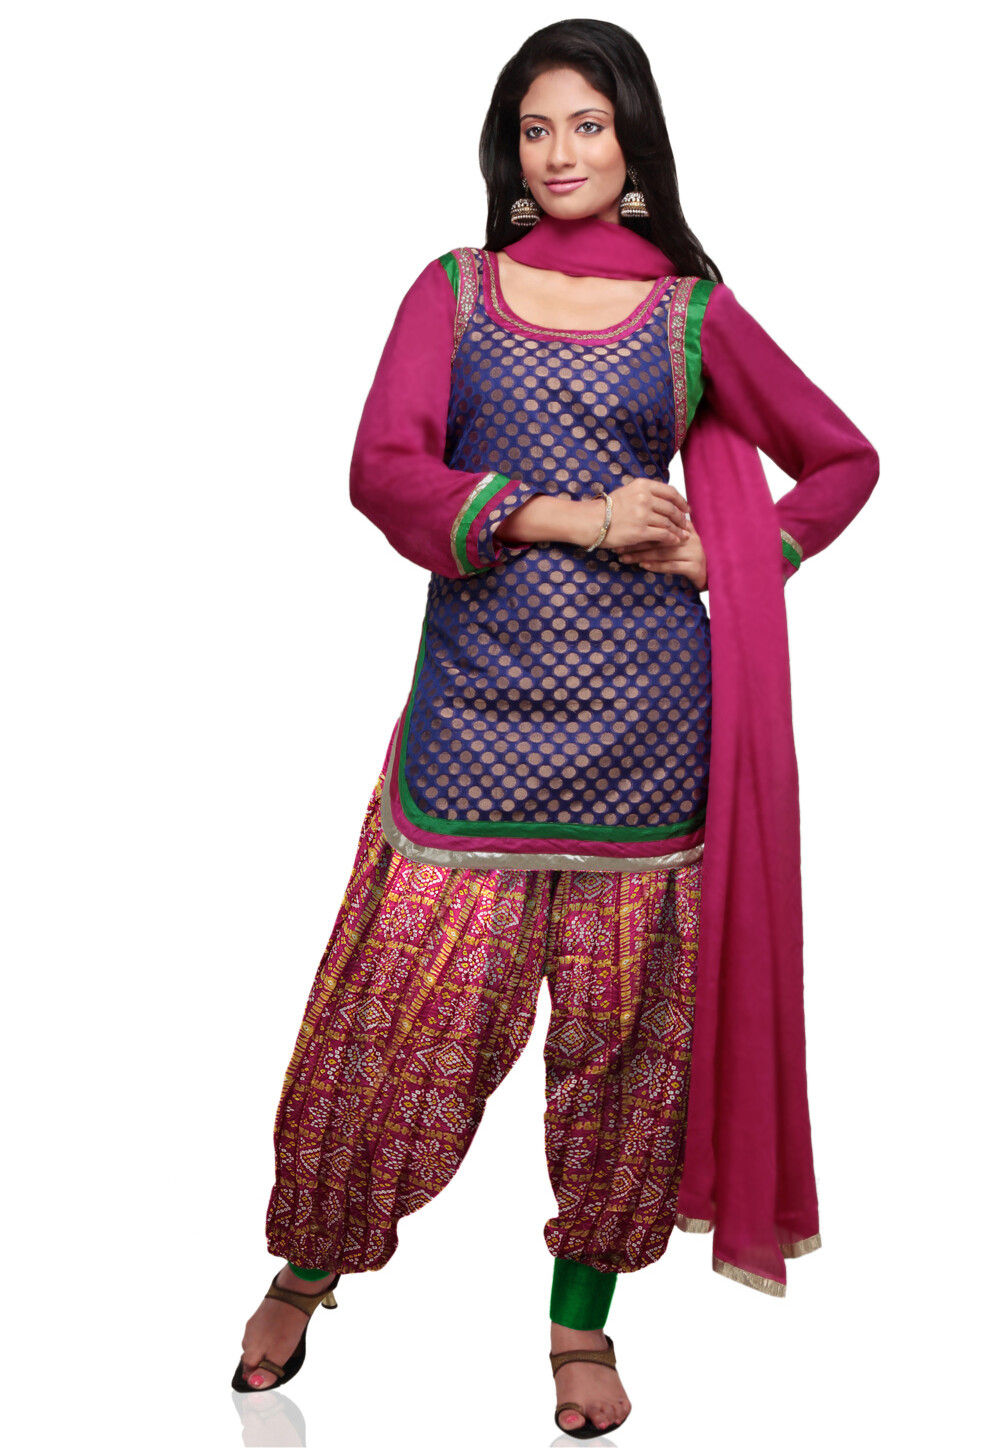 New Punjabi Suit || Plazo Pant Suit| Salwar Suit Design New || Latest  Fashion|| Fashion Lovers...||| | New punjabi suit, Plazo pant, Punjabi suits